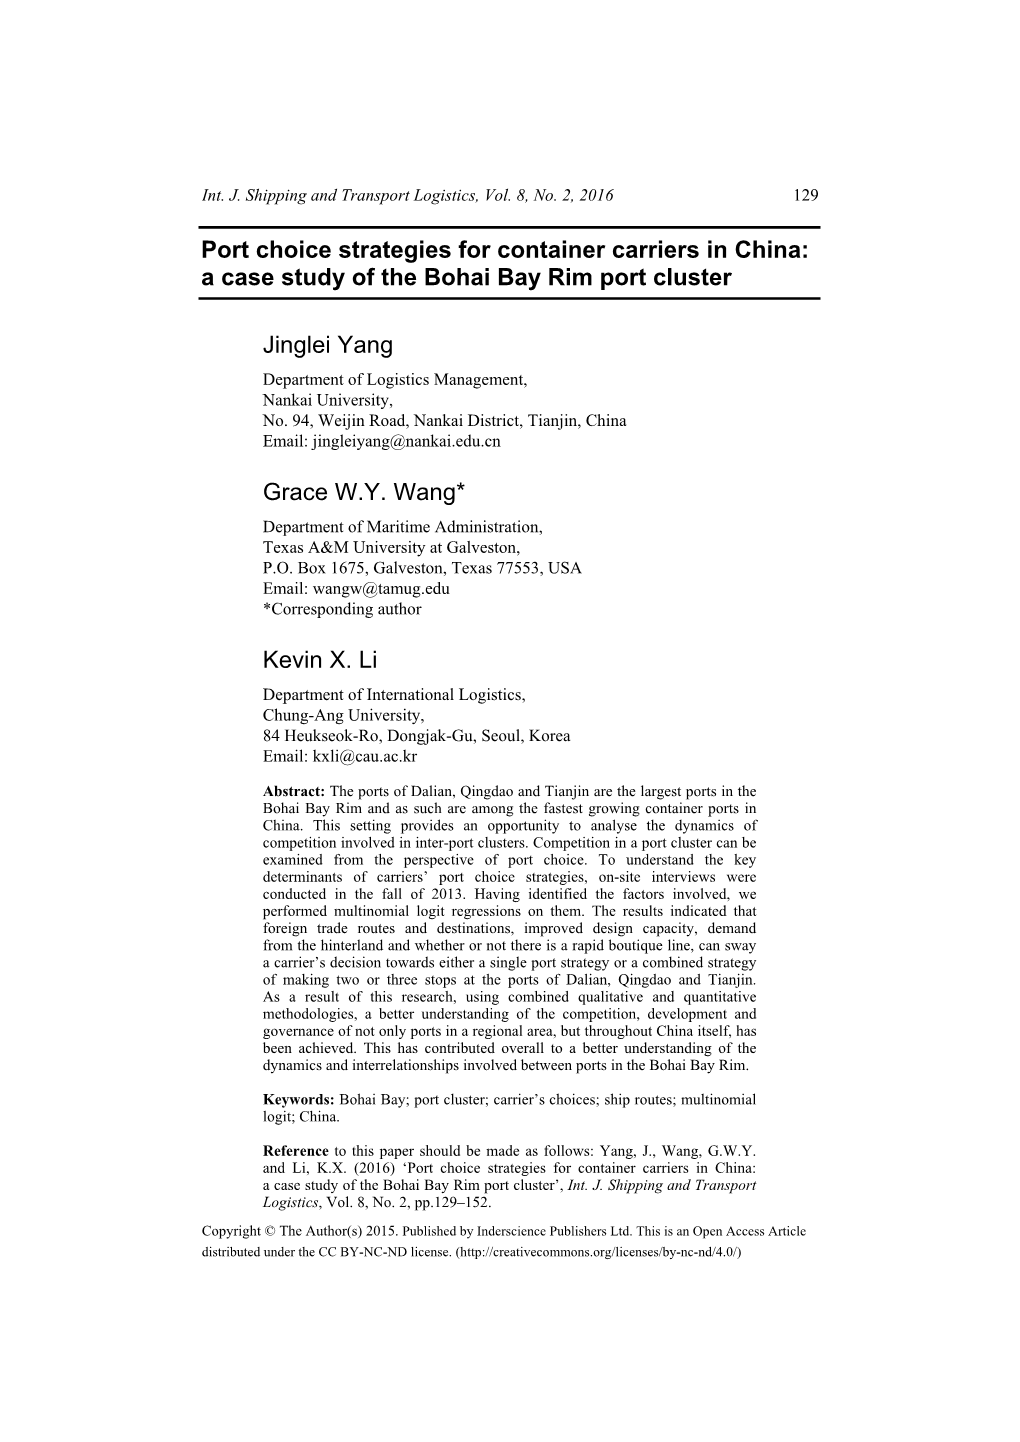 A Case Study of the Bohai Bay Rim Port Cluster Jinglei Yang